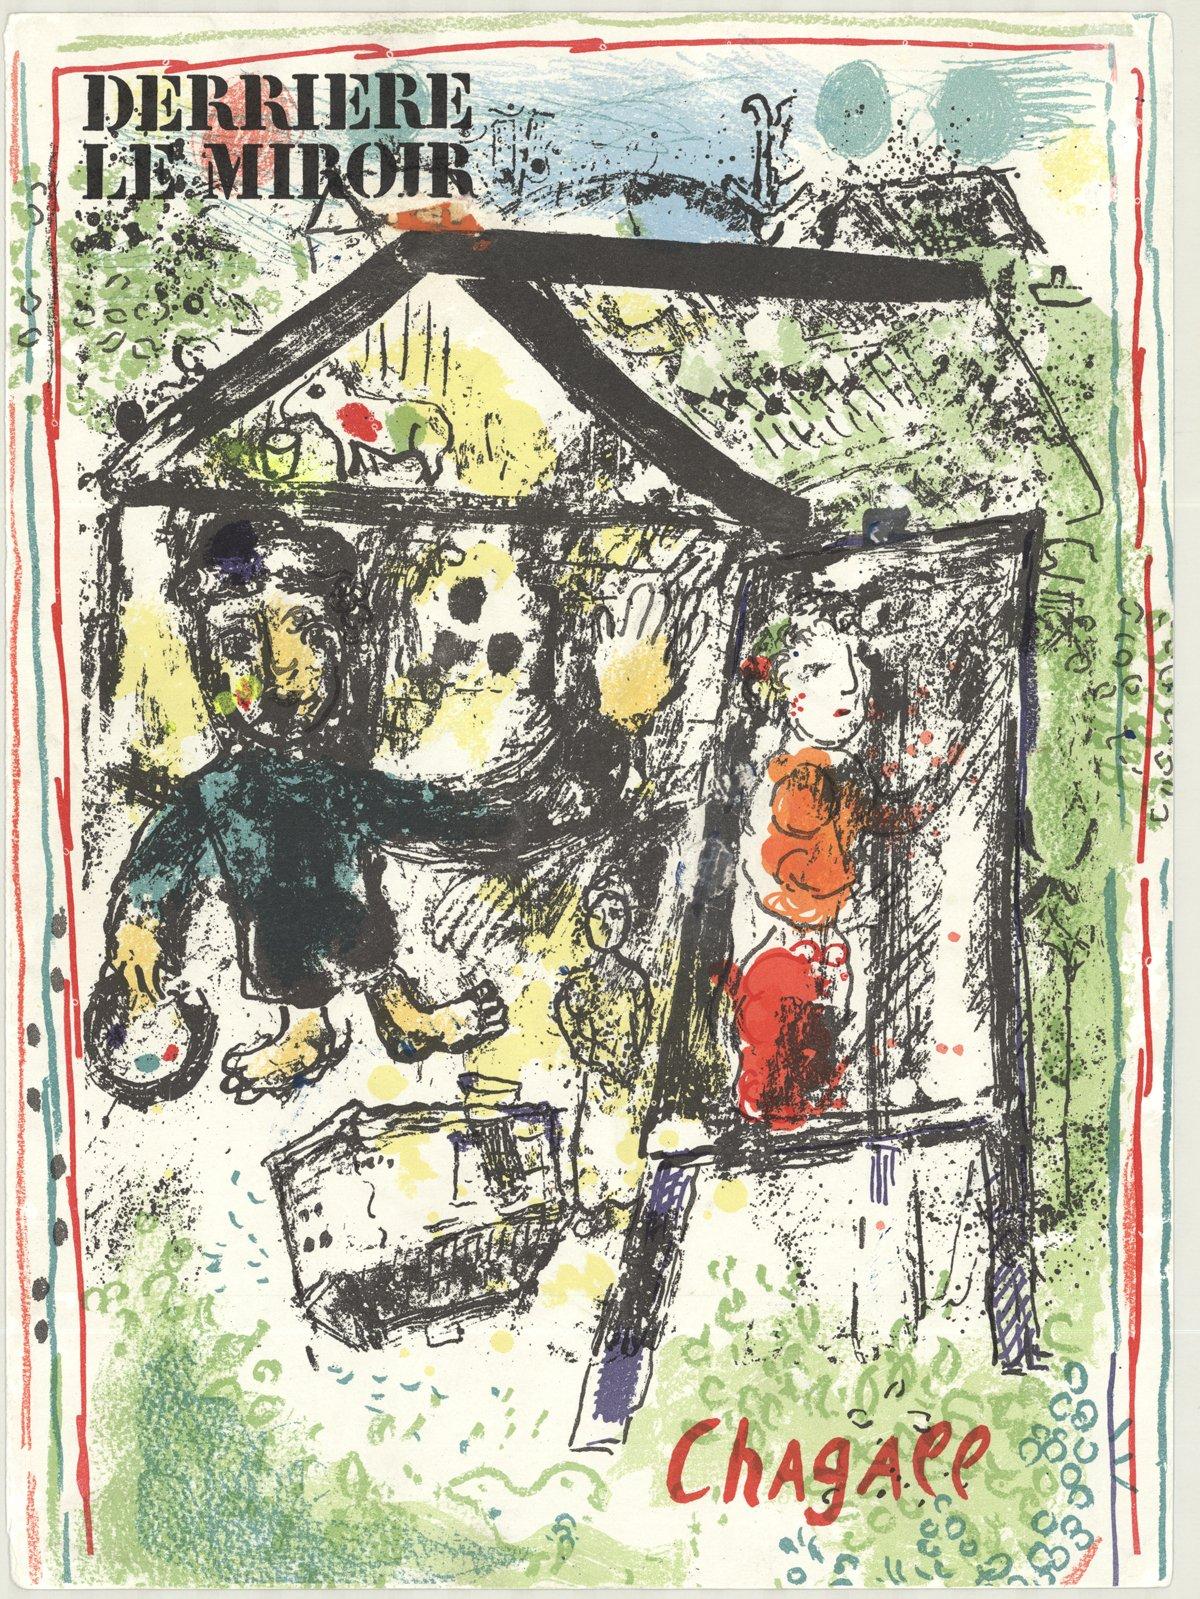 1969 Marc Chagall 'Derriere Le Miroir Cover' 